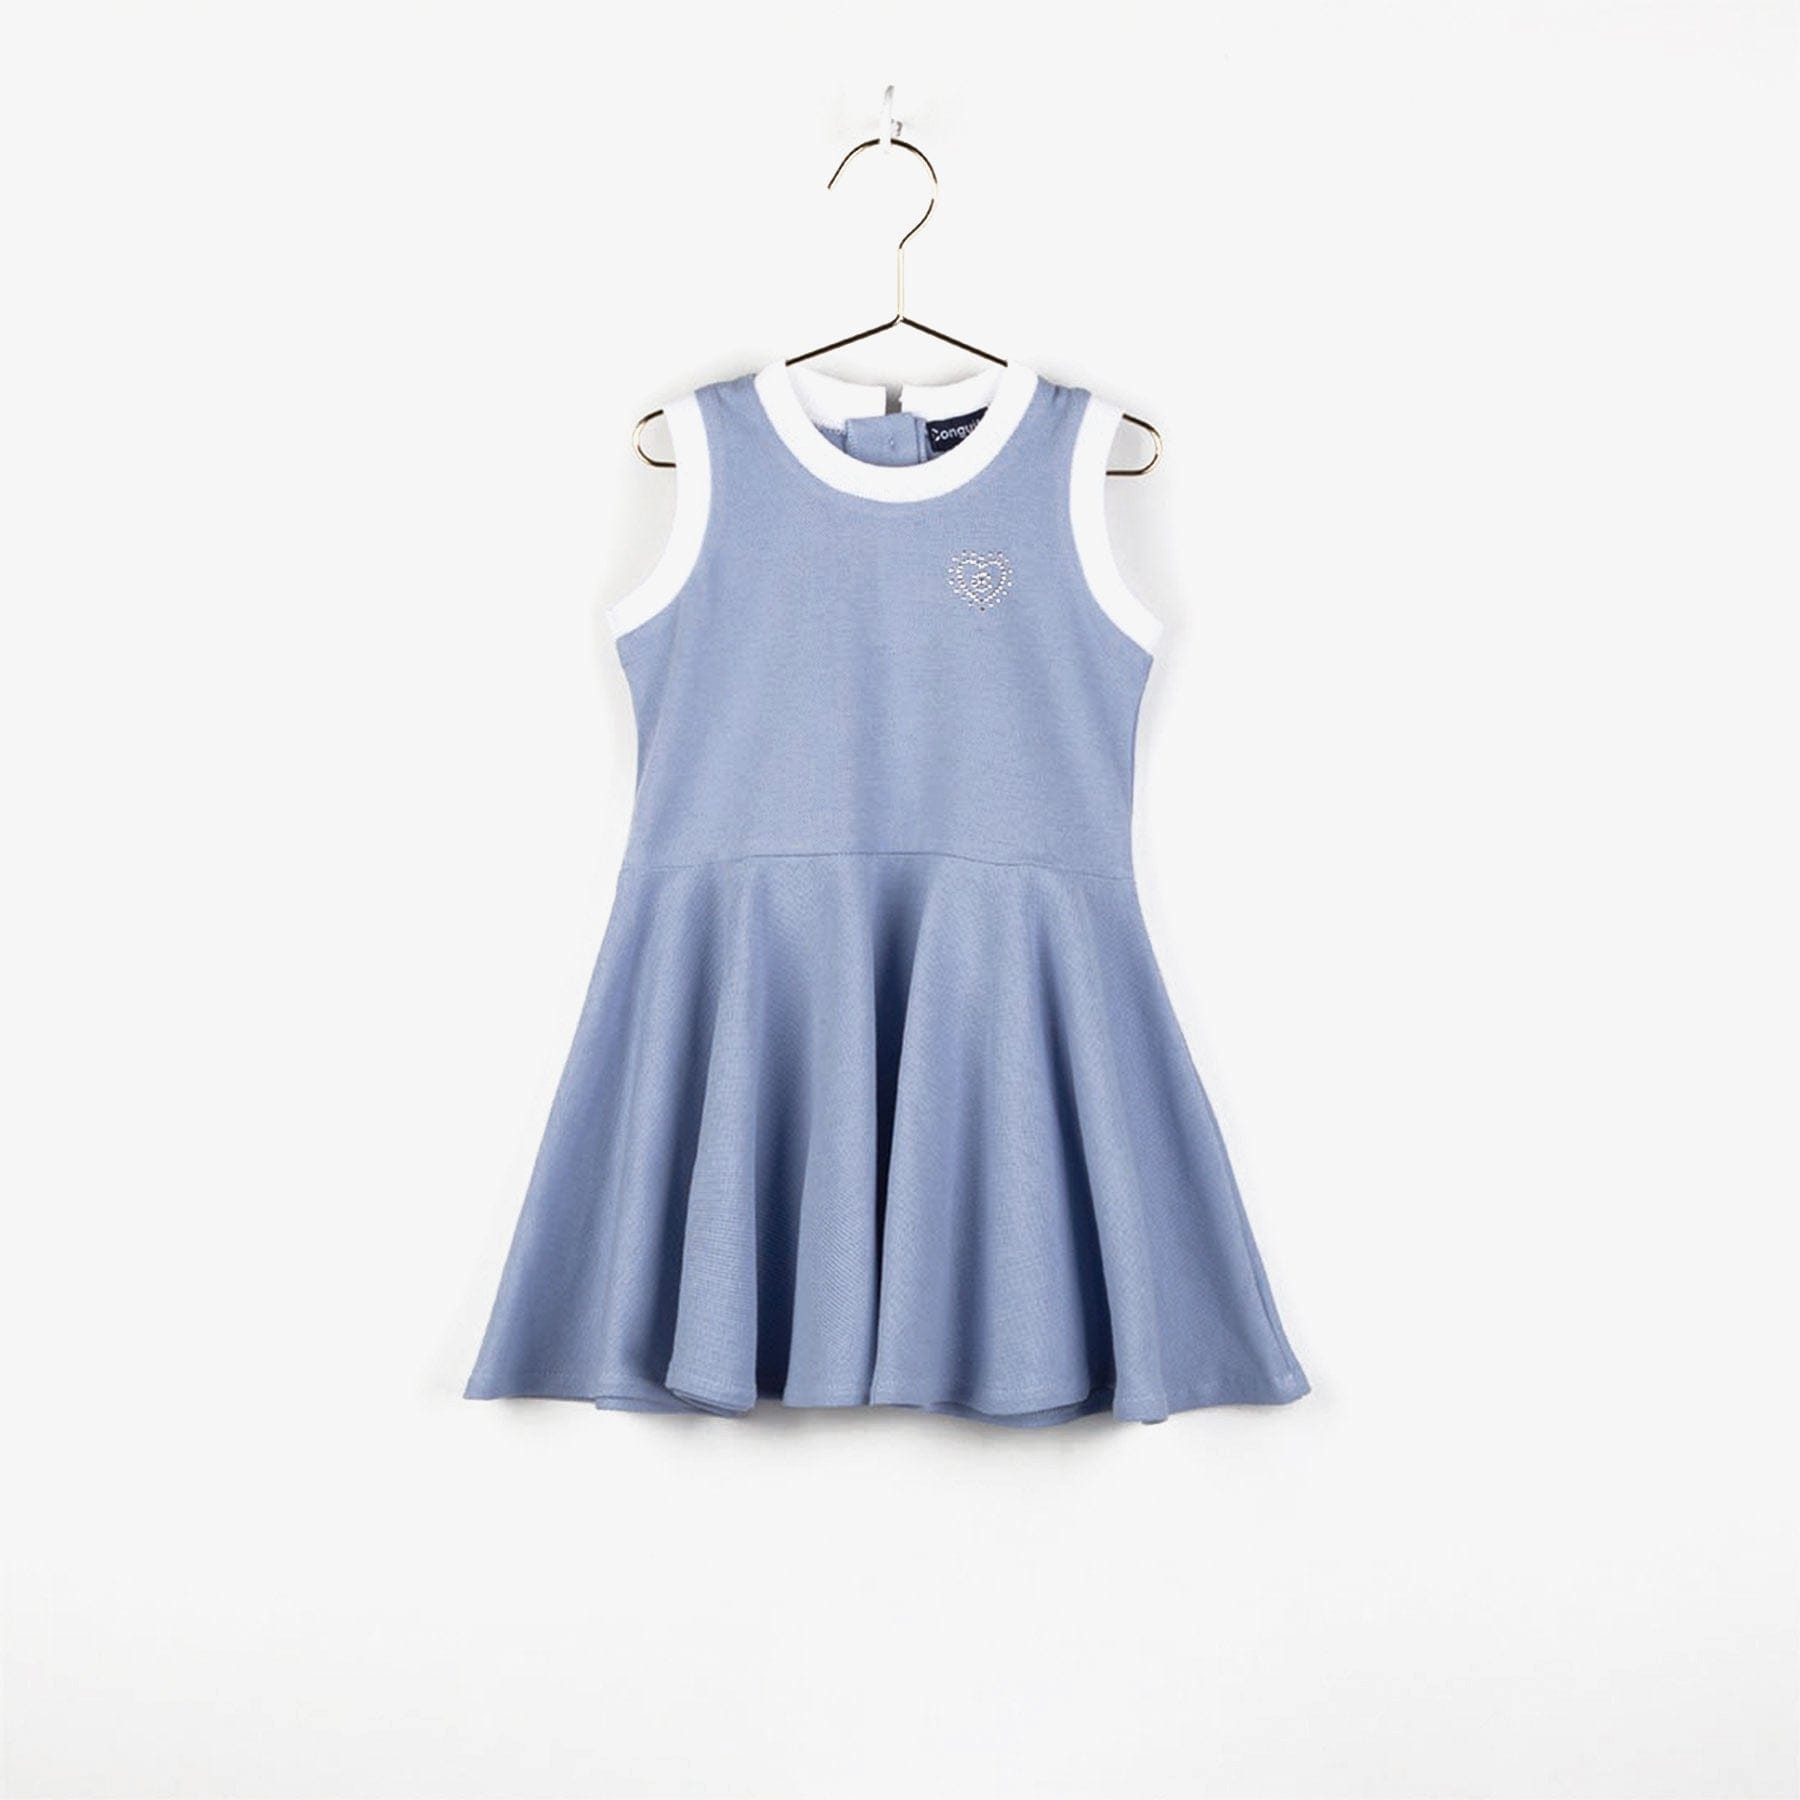 CONGUITOS TEXTIL Clothing Girl's Light Blue Skater Dress